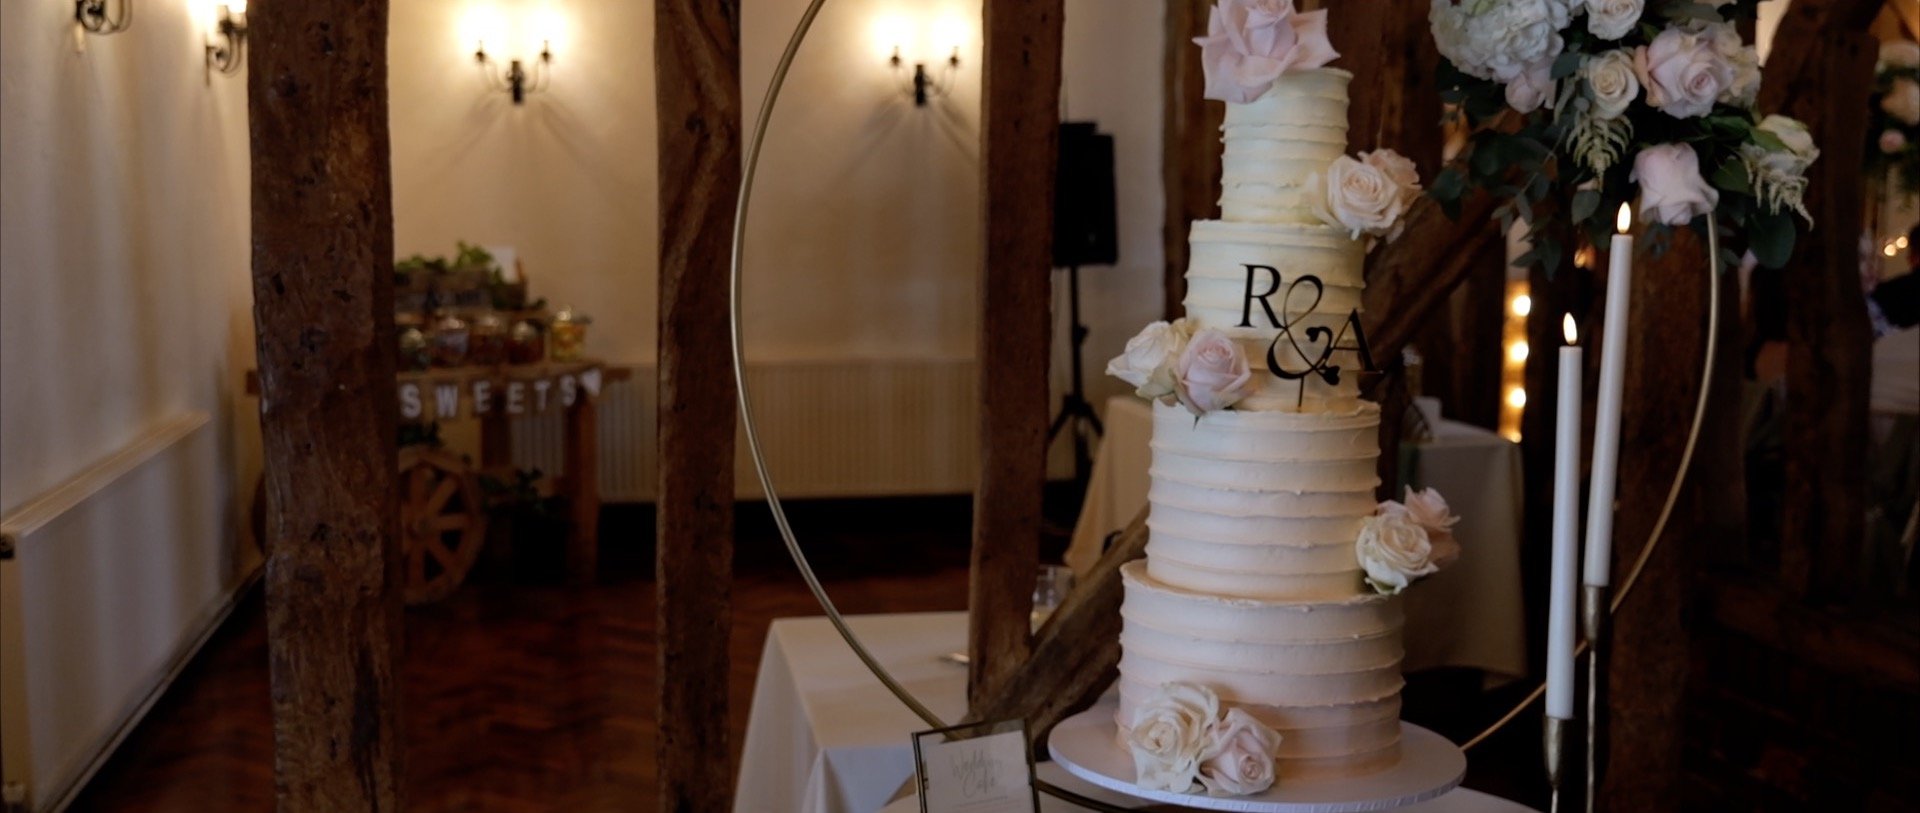 Crondon Park Wedding Videography - 3 Cheers Media - Cake.jpg